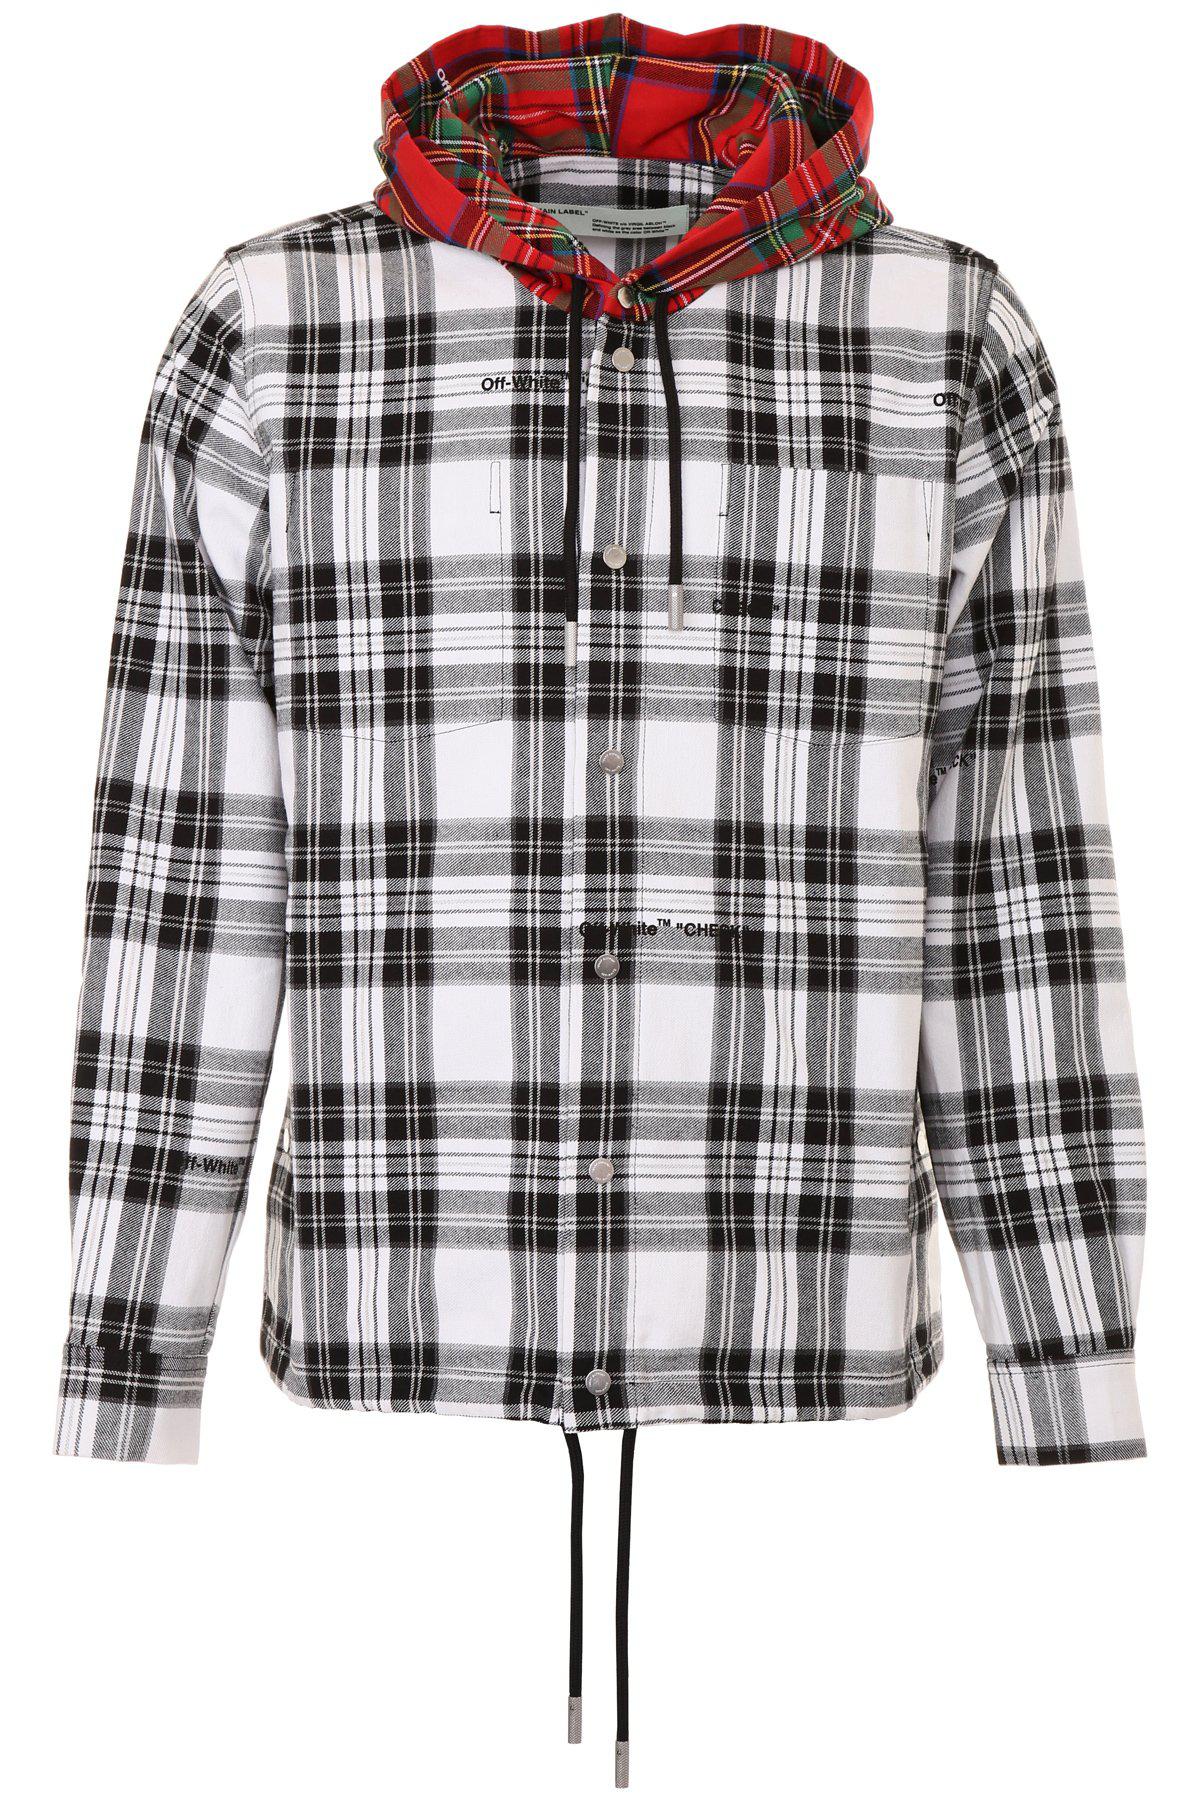 Off-White c/o Virgil Abloh Hooded Flannel Check Jacket for Men | Lyst